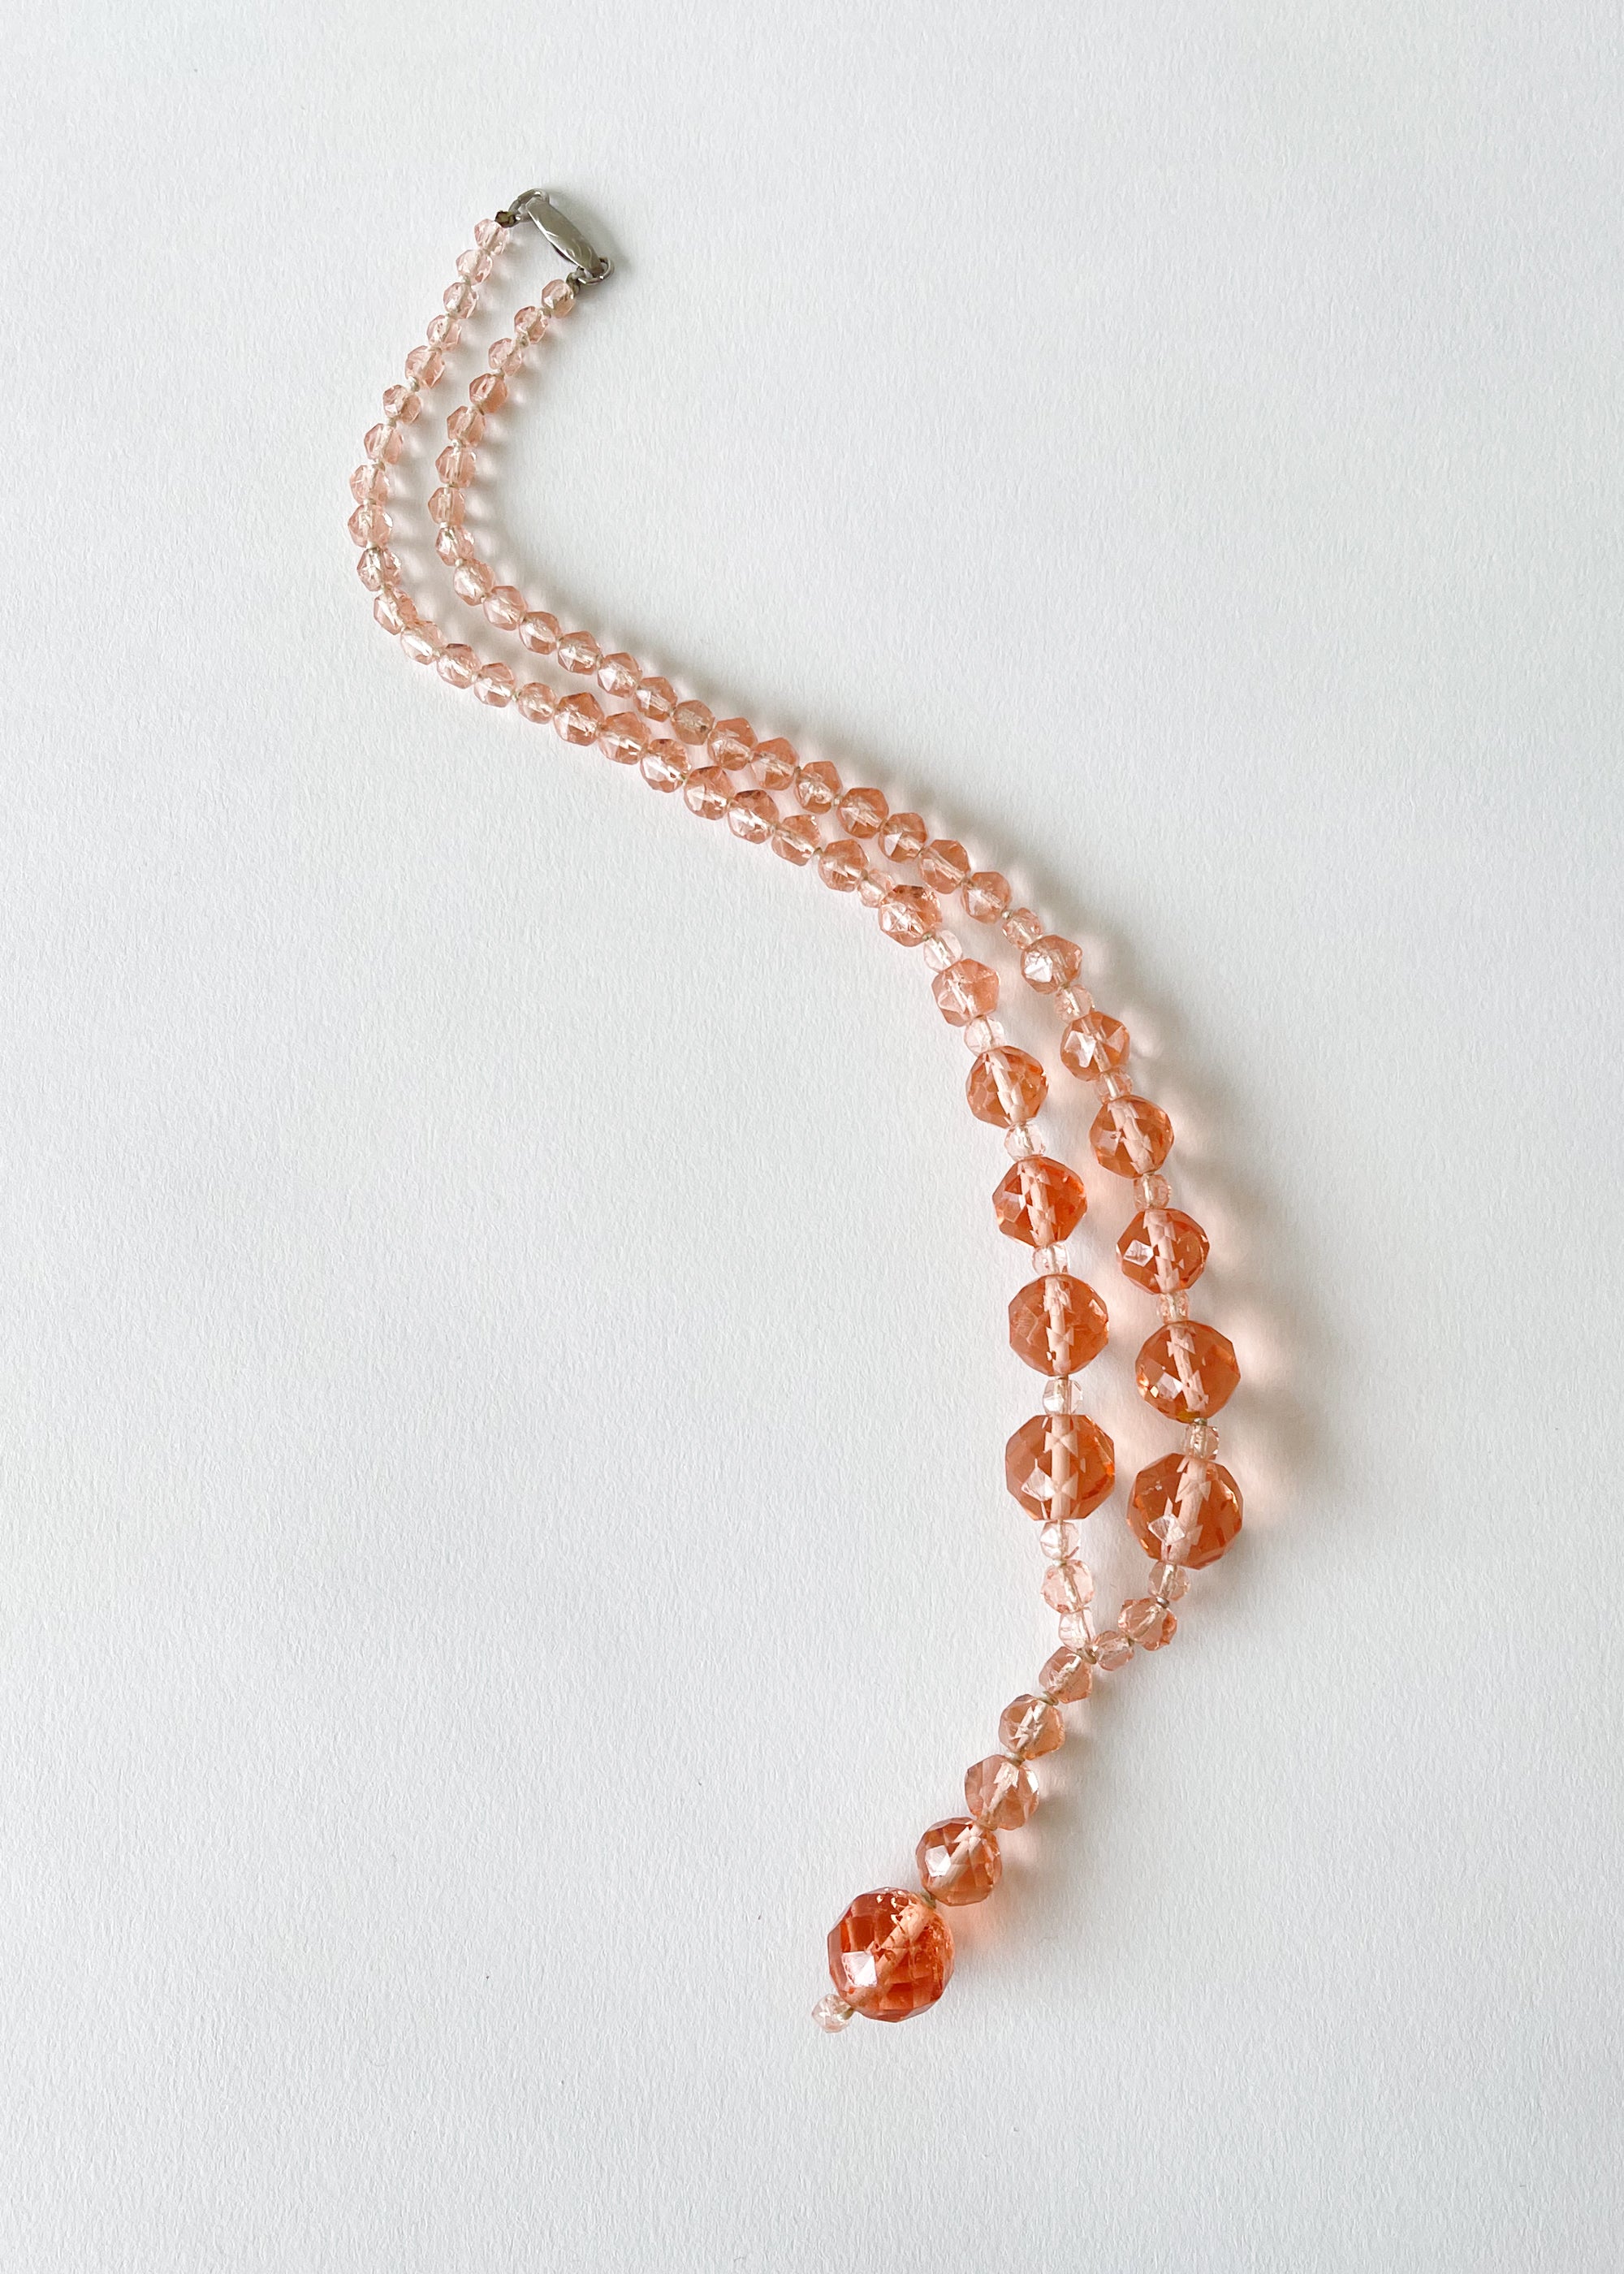 Vintage 27 Necklace Pink/tan Speckled Porclain Beads. 